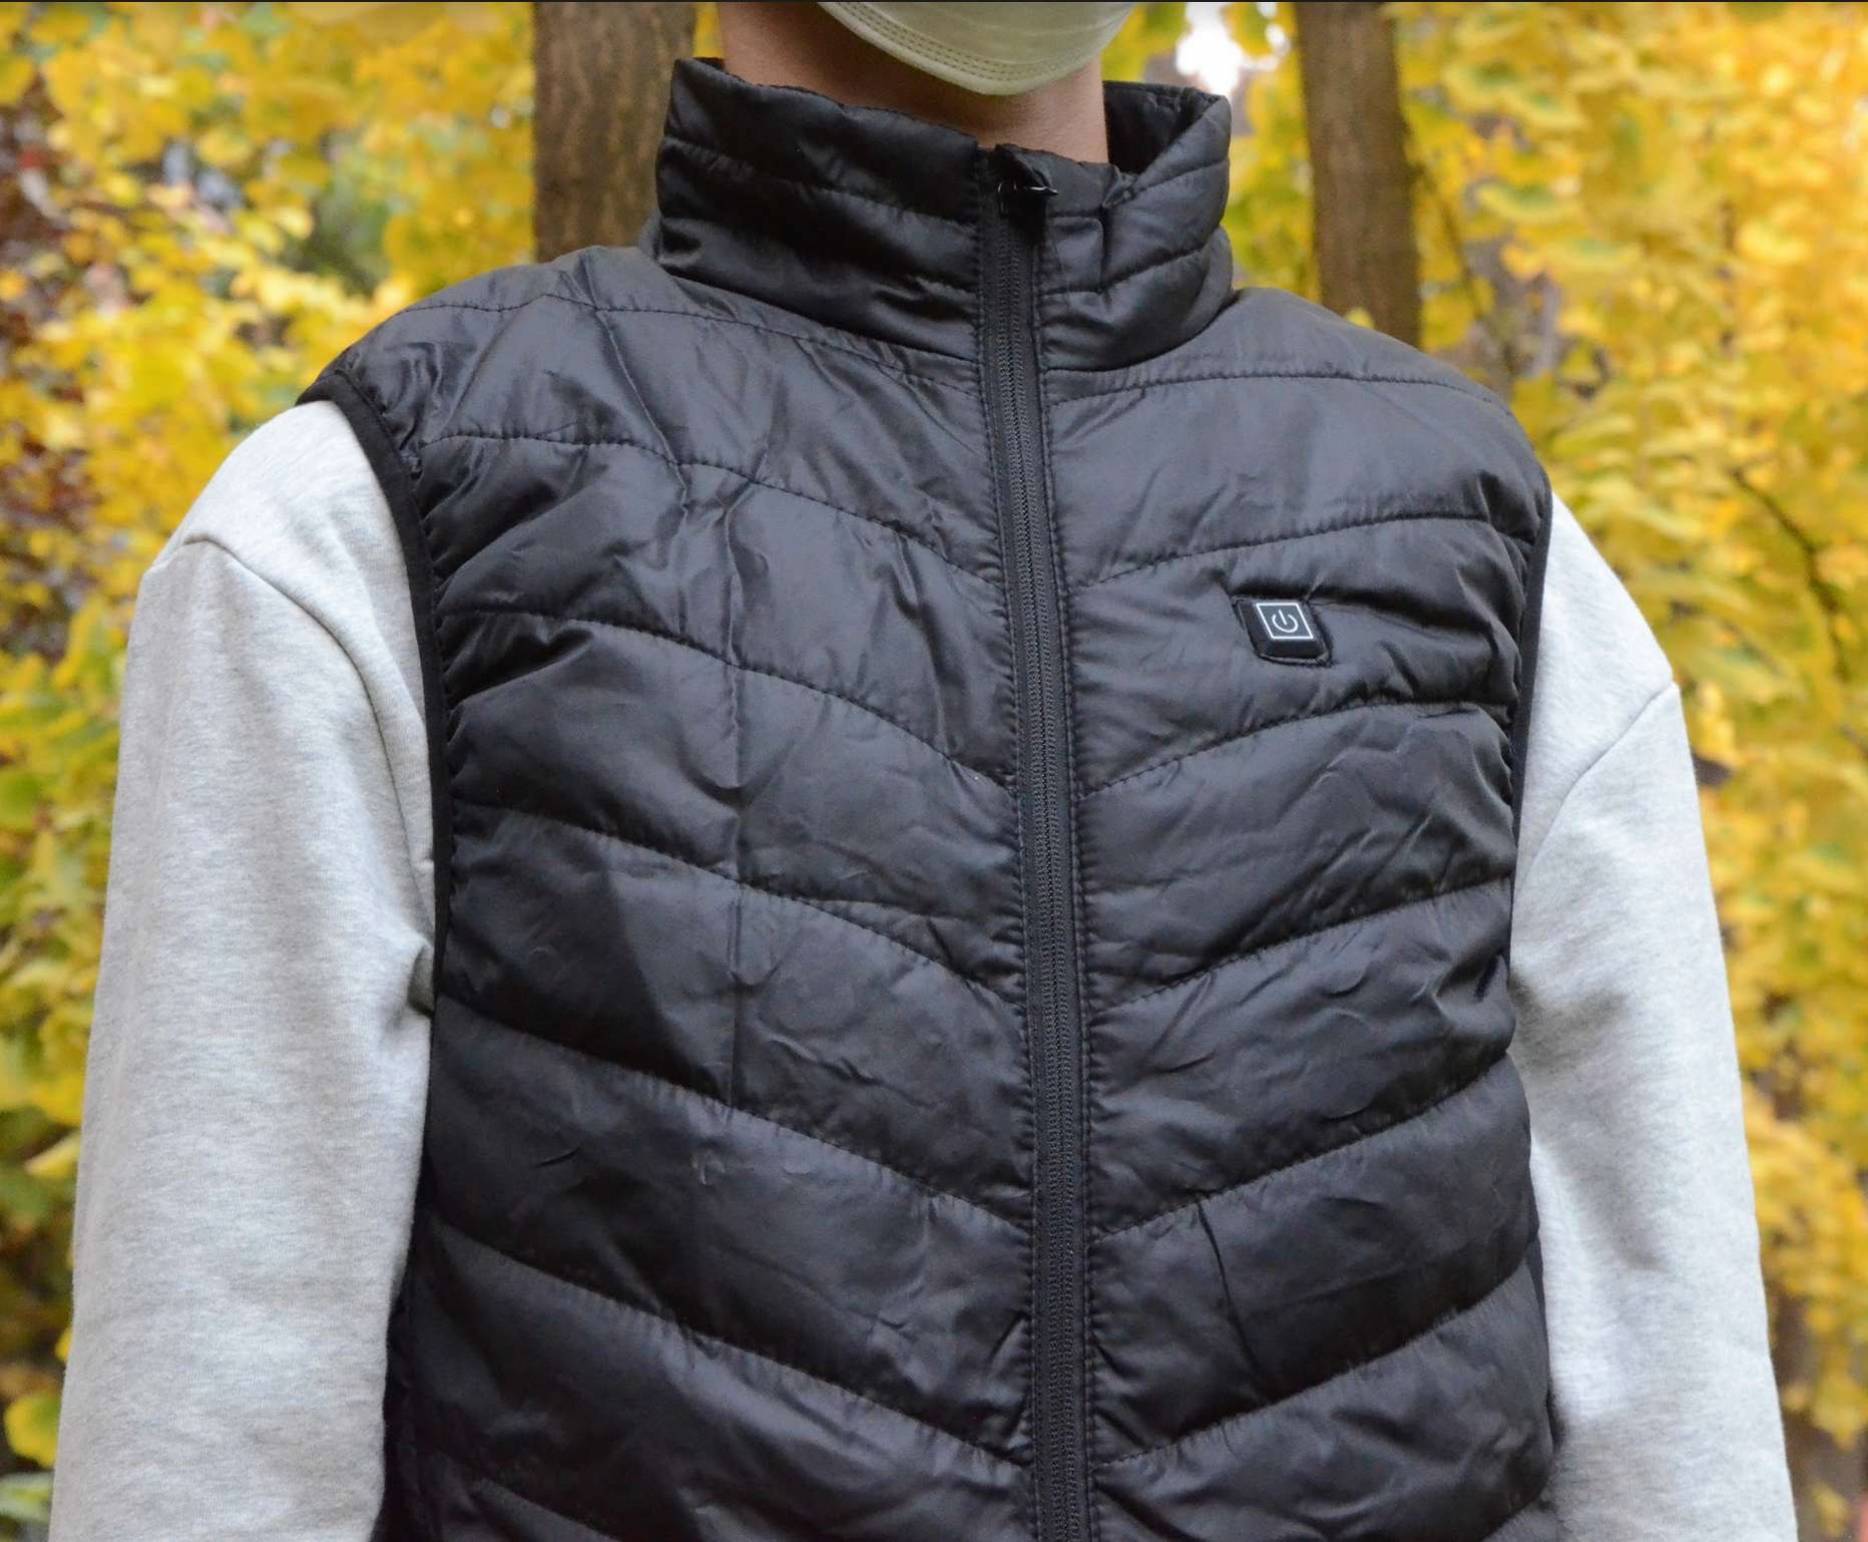 Best Inexpensive Heated Vest